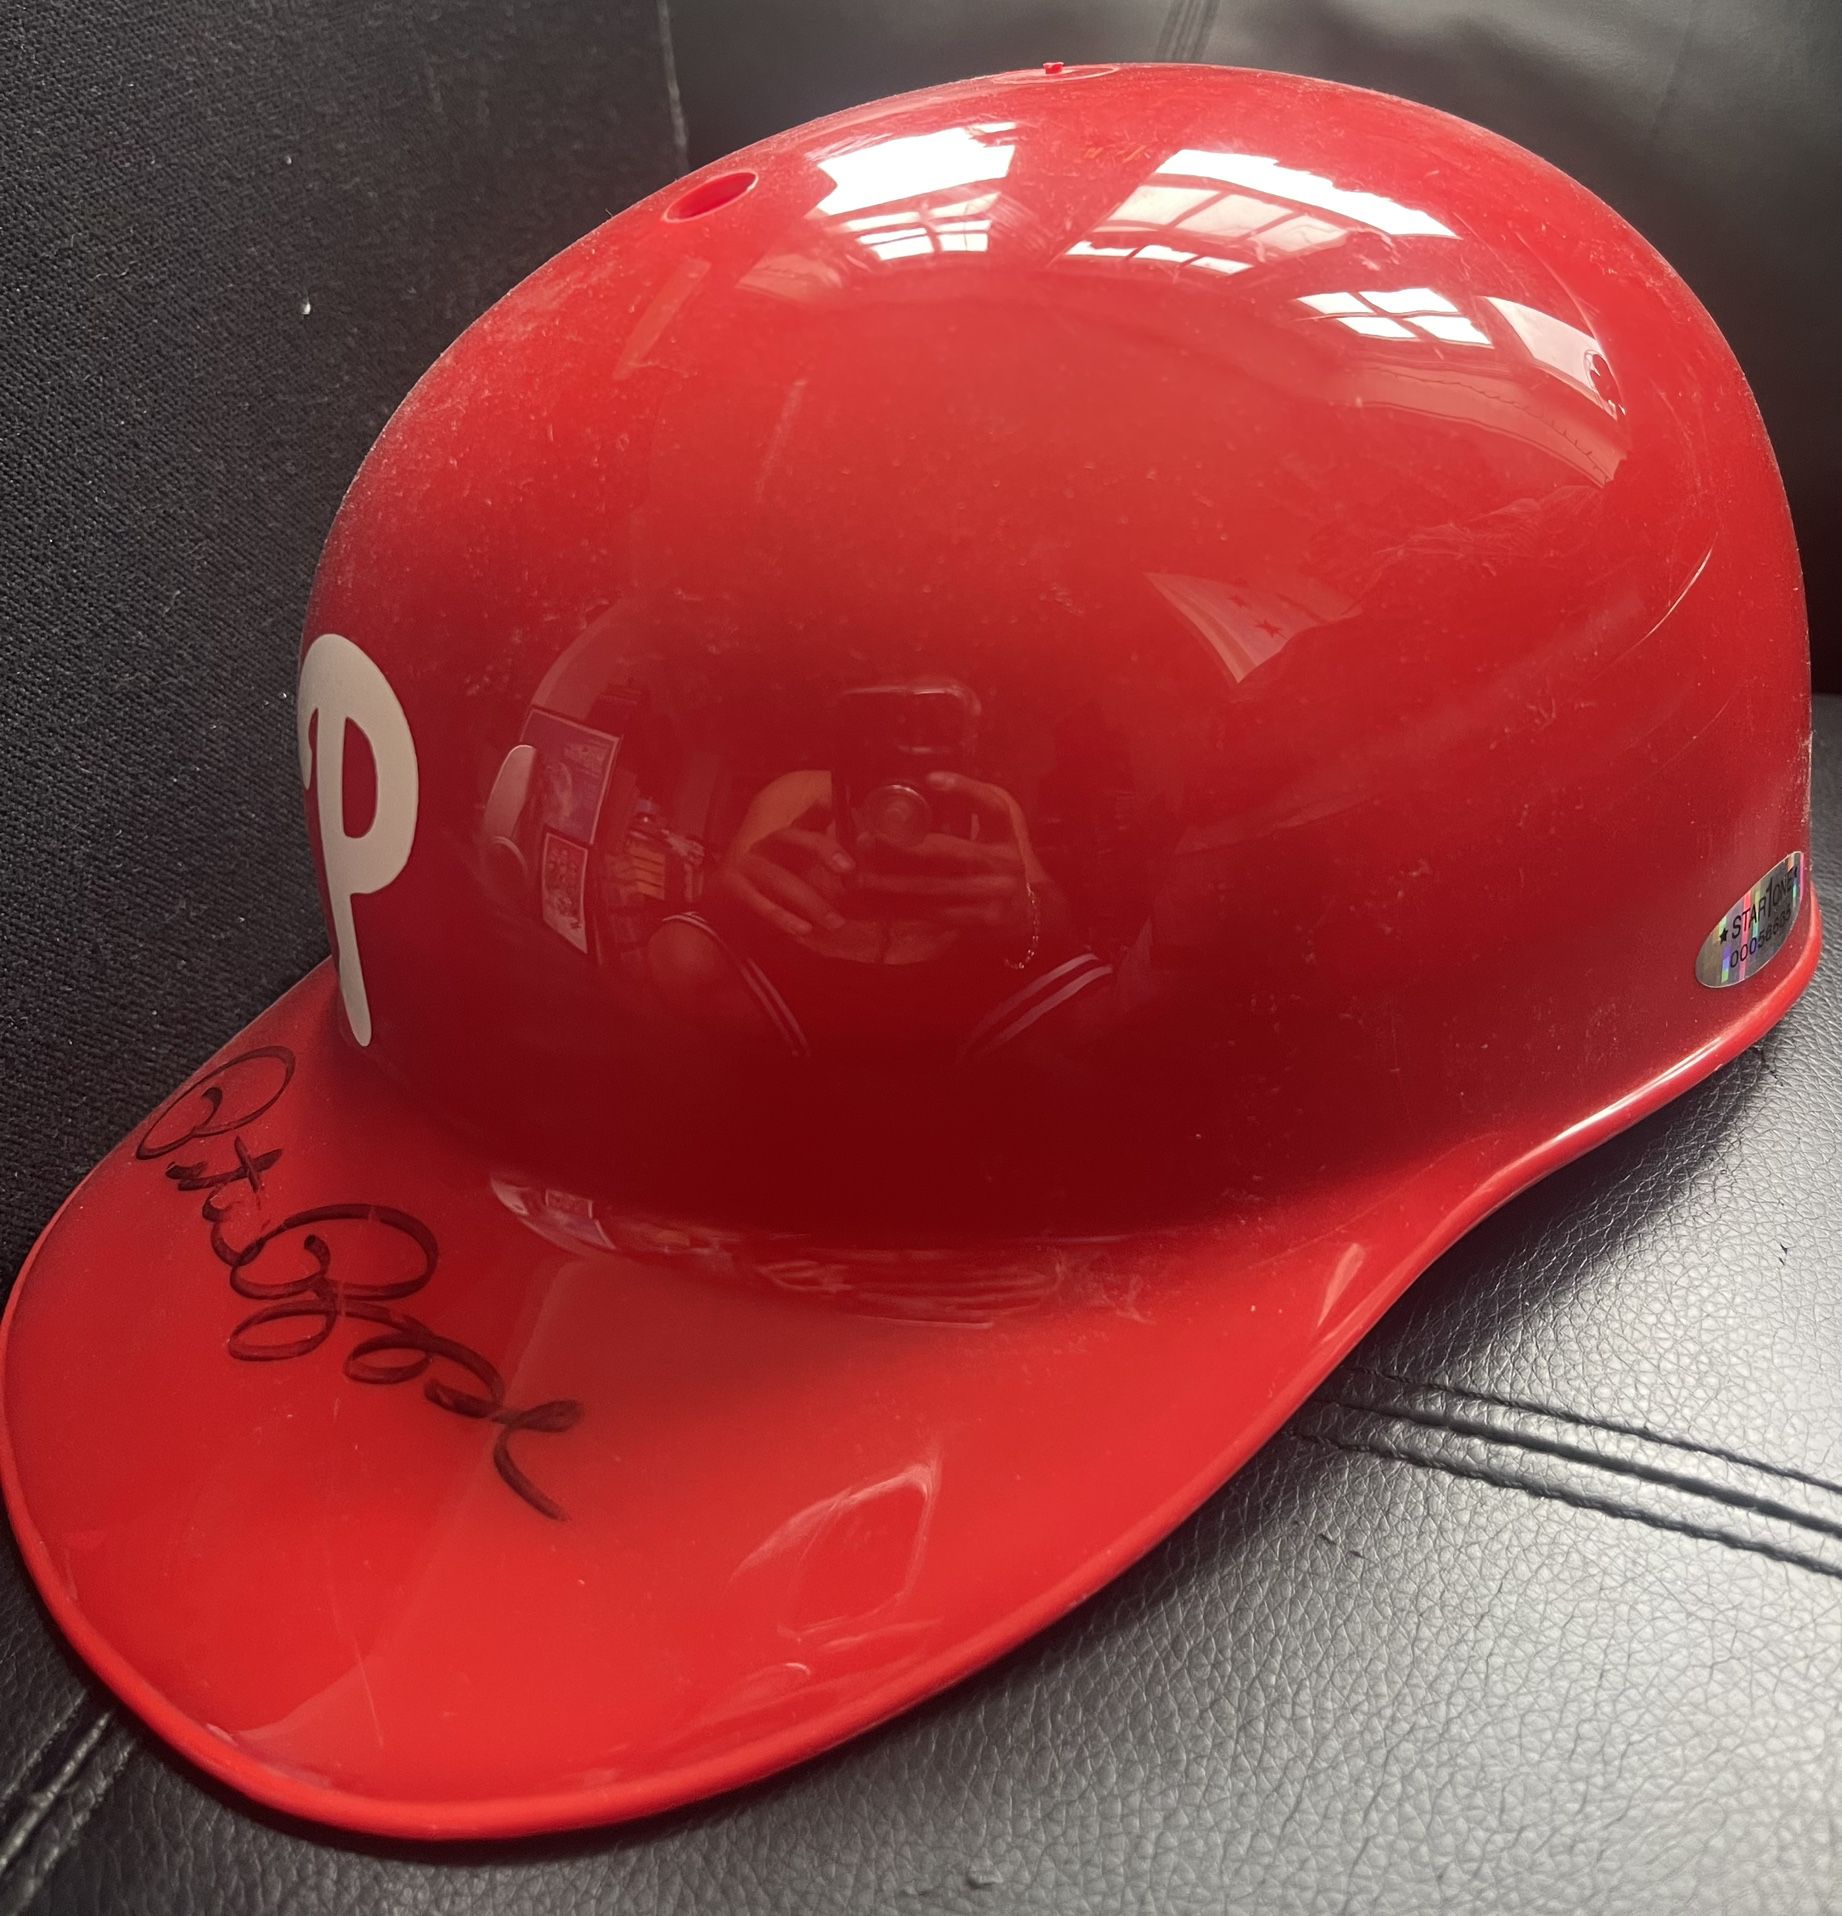 Pete Rose Autographed Phillies Helmet